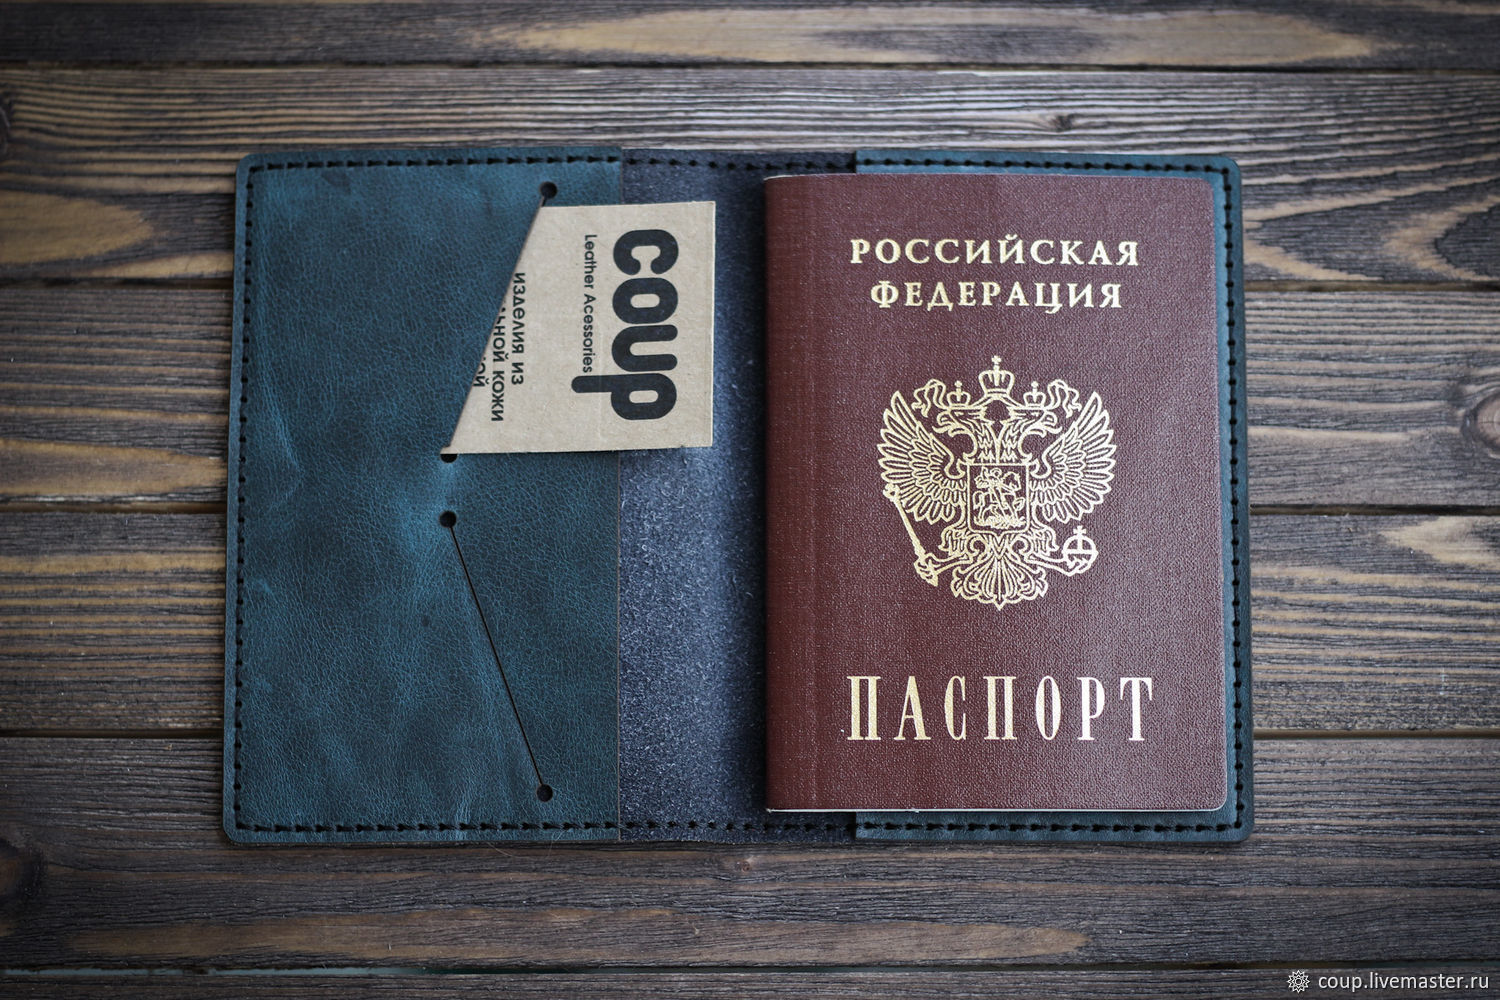 Обложка на паспорт на каждую страницу